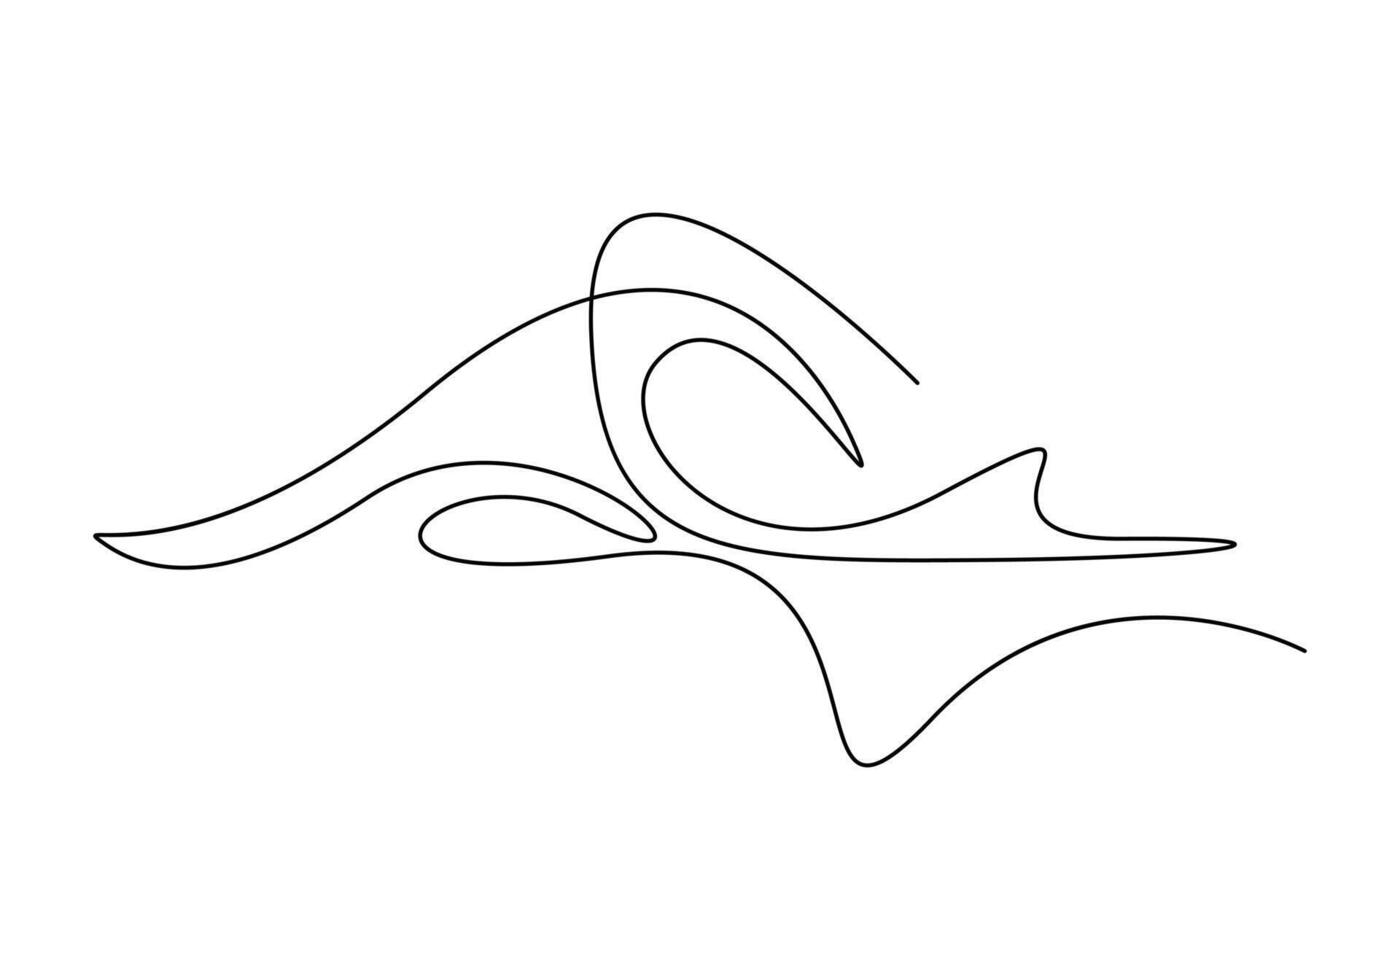 hav Vinka enda kontinuerlig linje teckning vektor illustration